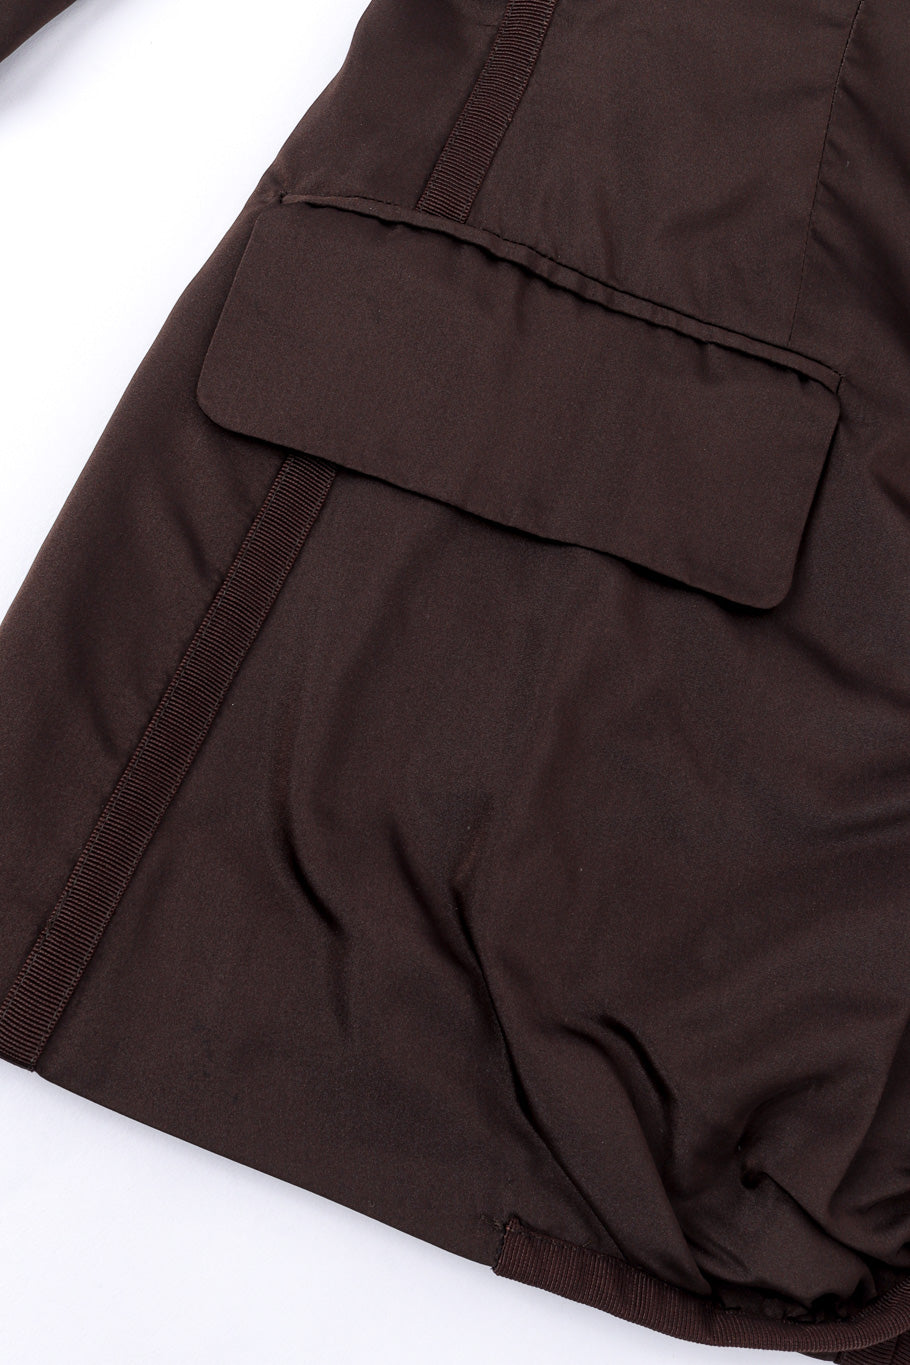 Silk velvet jacket by Yves Saint Laurent pocket close @recessla